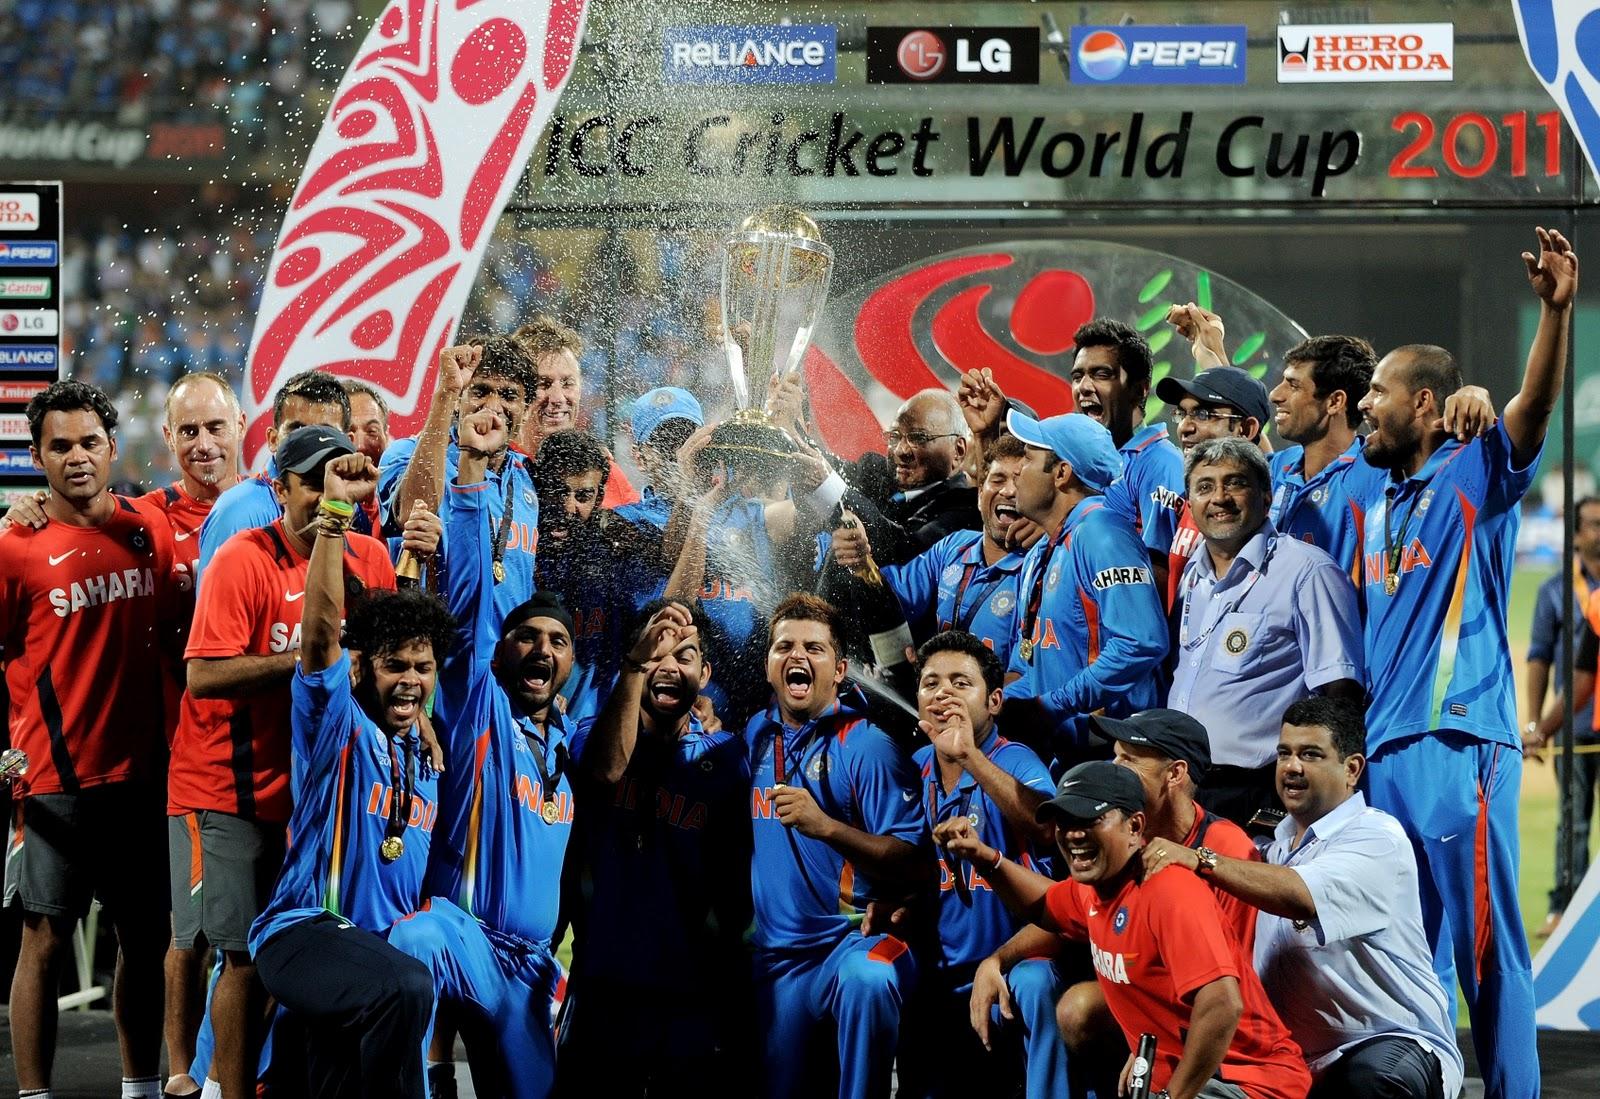 wallpaper cricket: India Cricket World Cup 2011 wallpaper